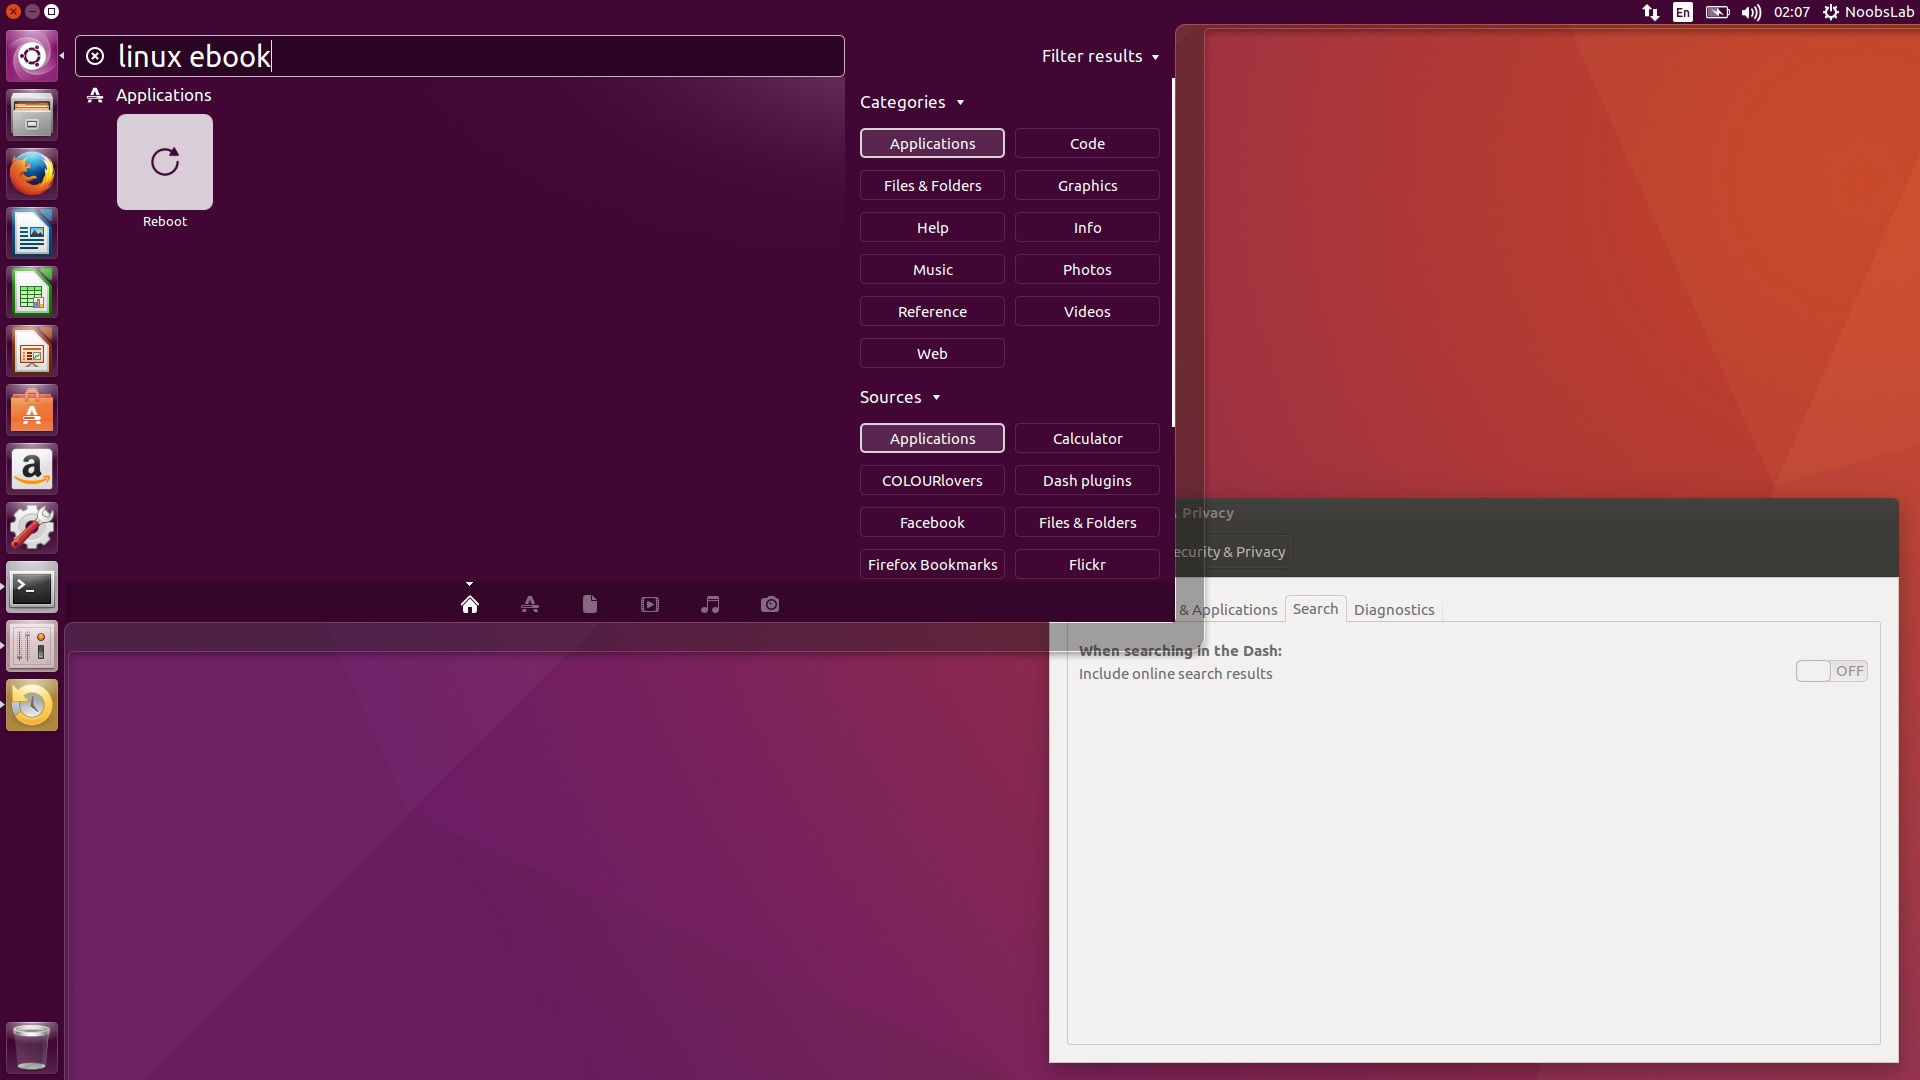 Ubuntu 16 04 Xenial Xerus Features Overview Screenshots And Download Links Noobslab Eye On Digital World